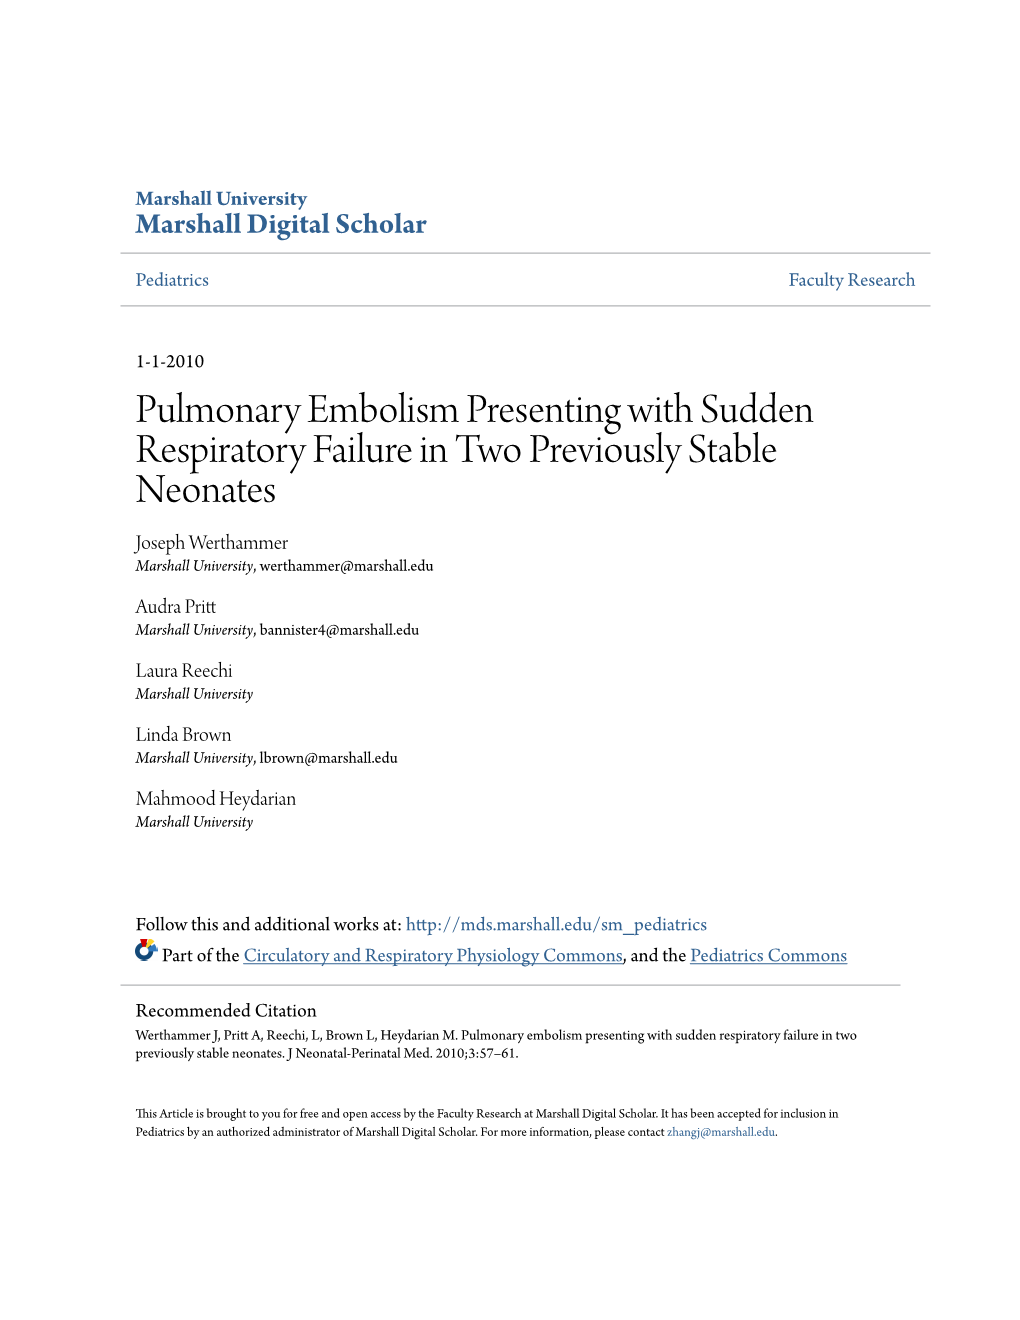 Pulmonary Embolism Presenting with Sudden Respiratory Failure in Two Previously Stable Neonates Joseph Werthammer Marshall University, Werthammer@Marshall.Edu